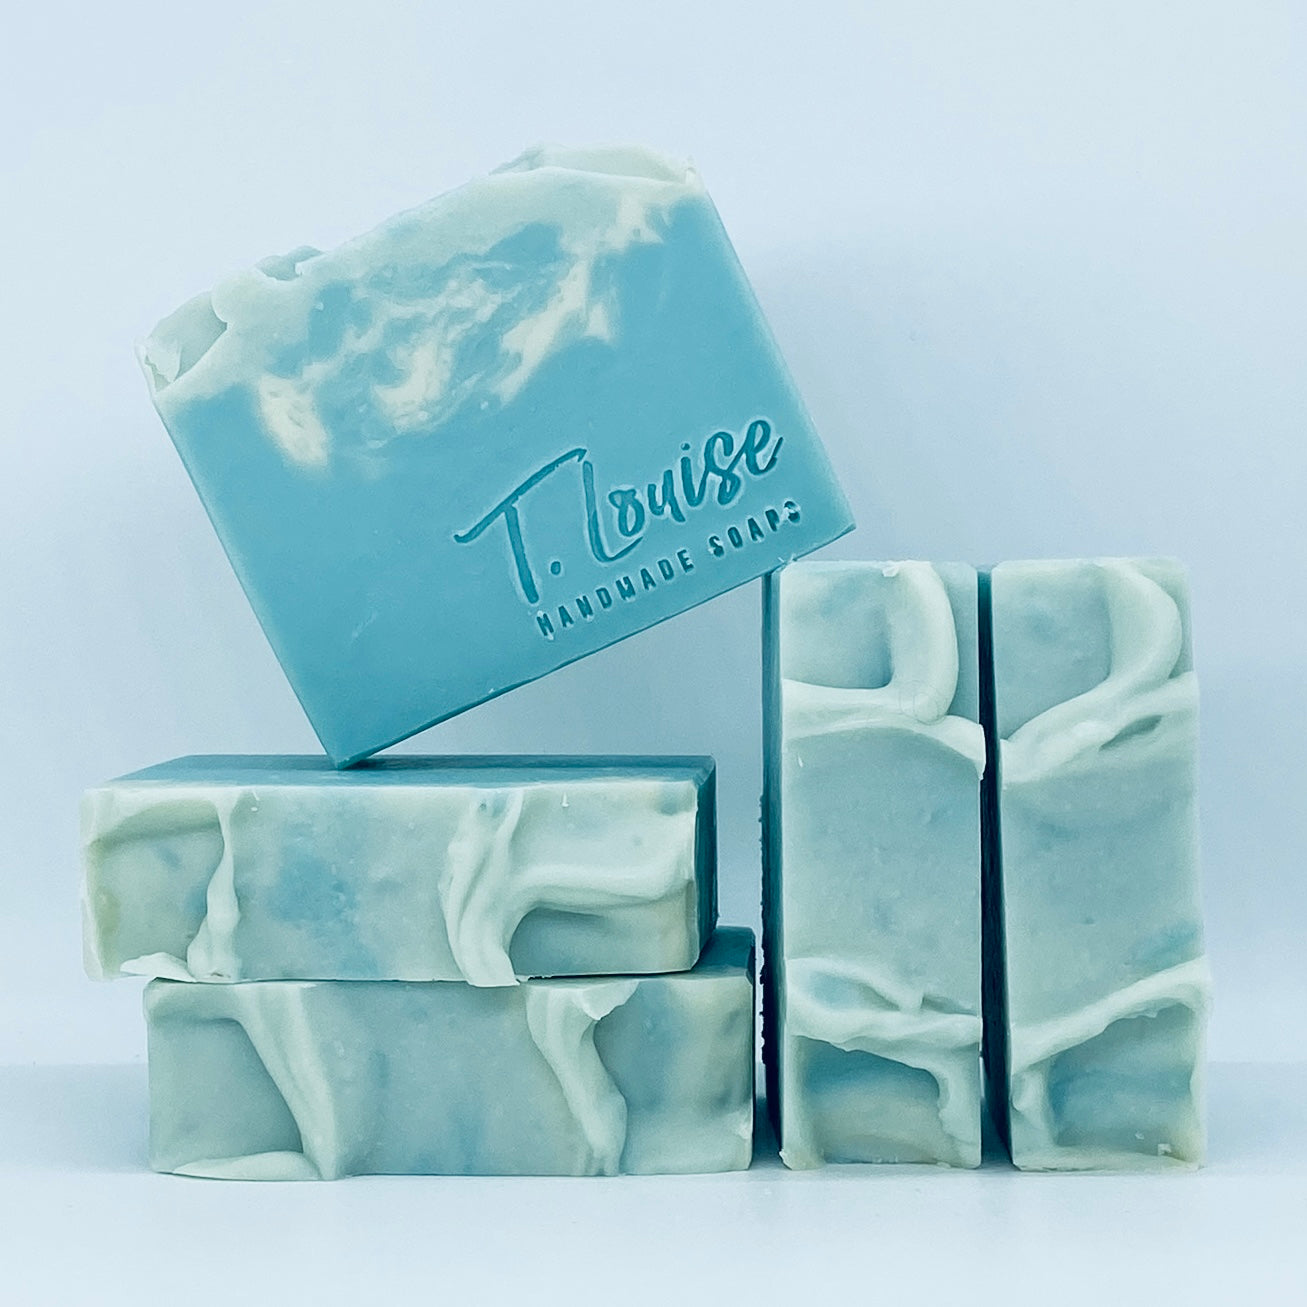 Ocean Blue / Handmade soap